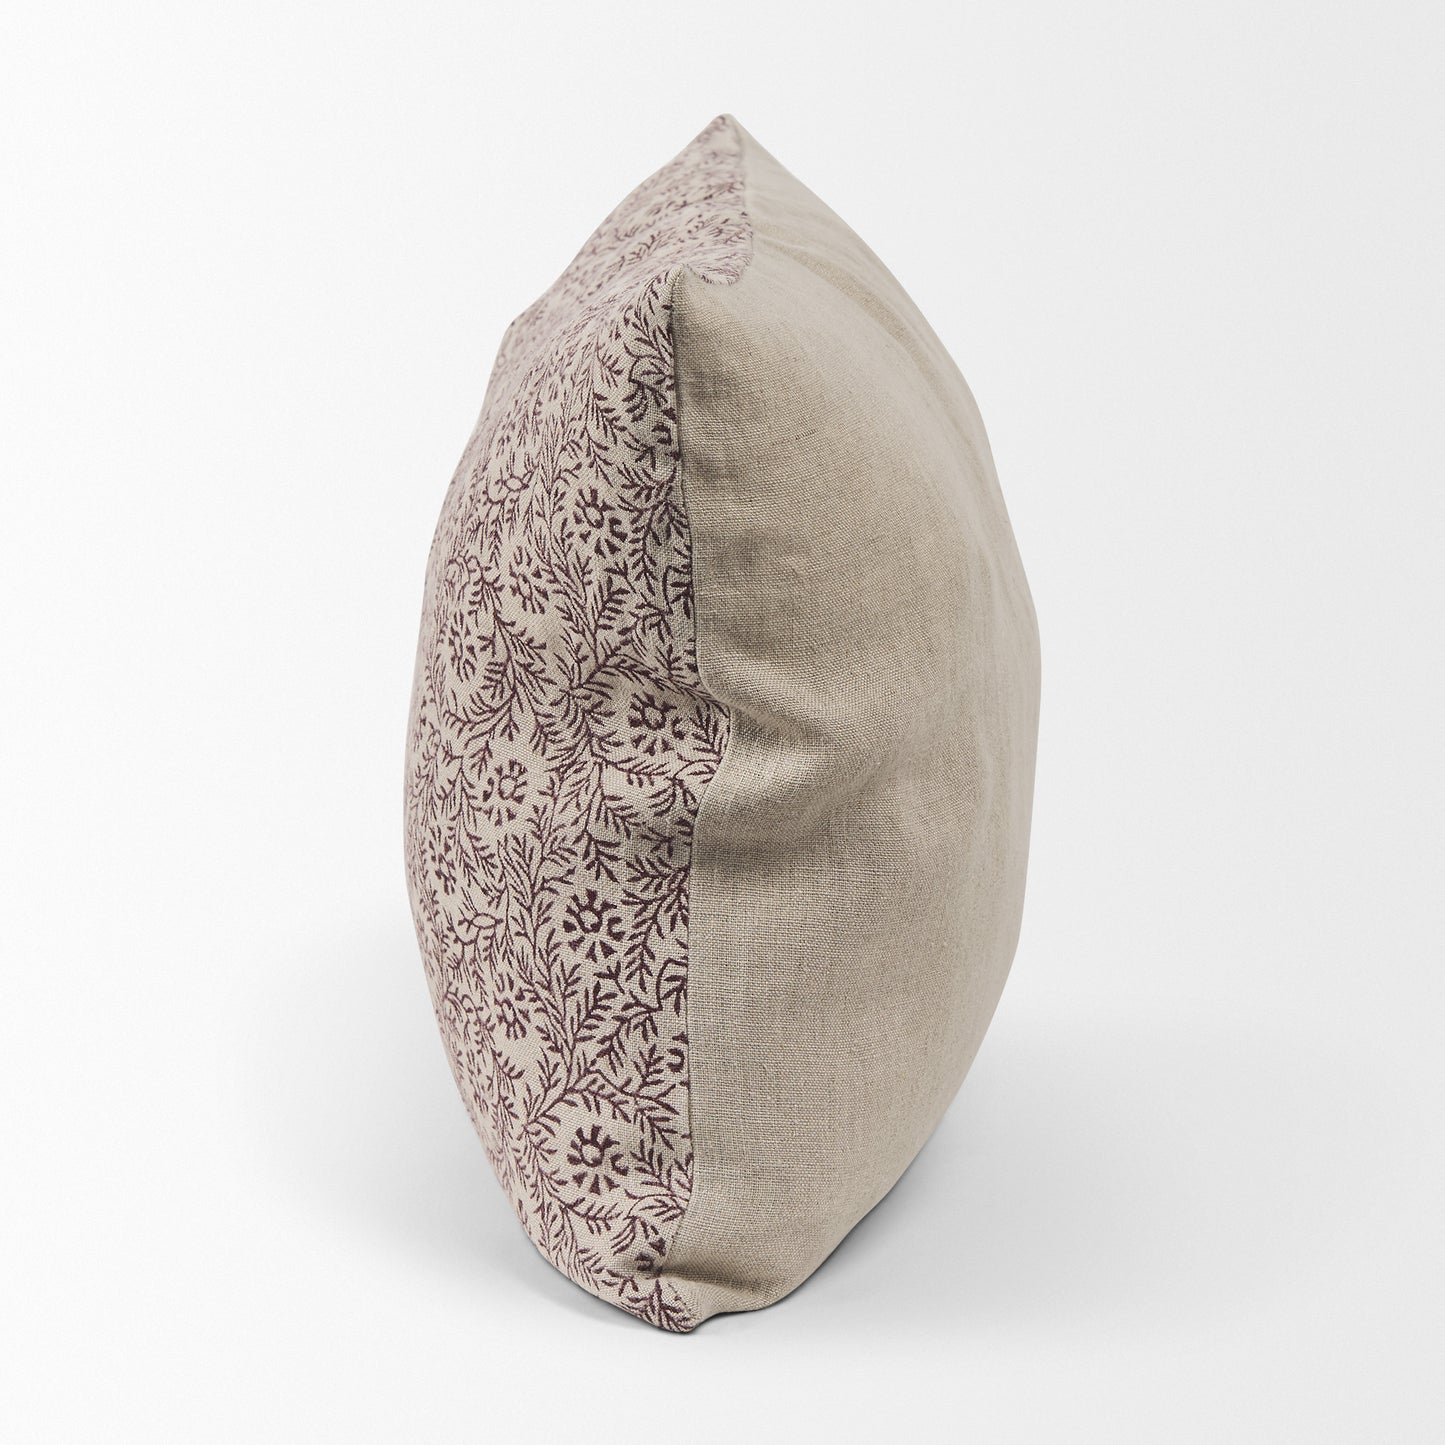 Rosemary Linen Lumbar Cushion Cover